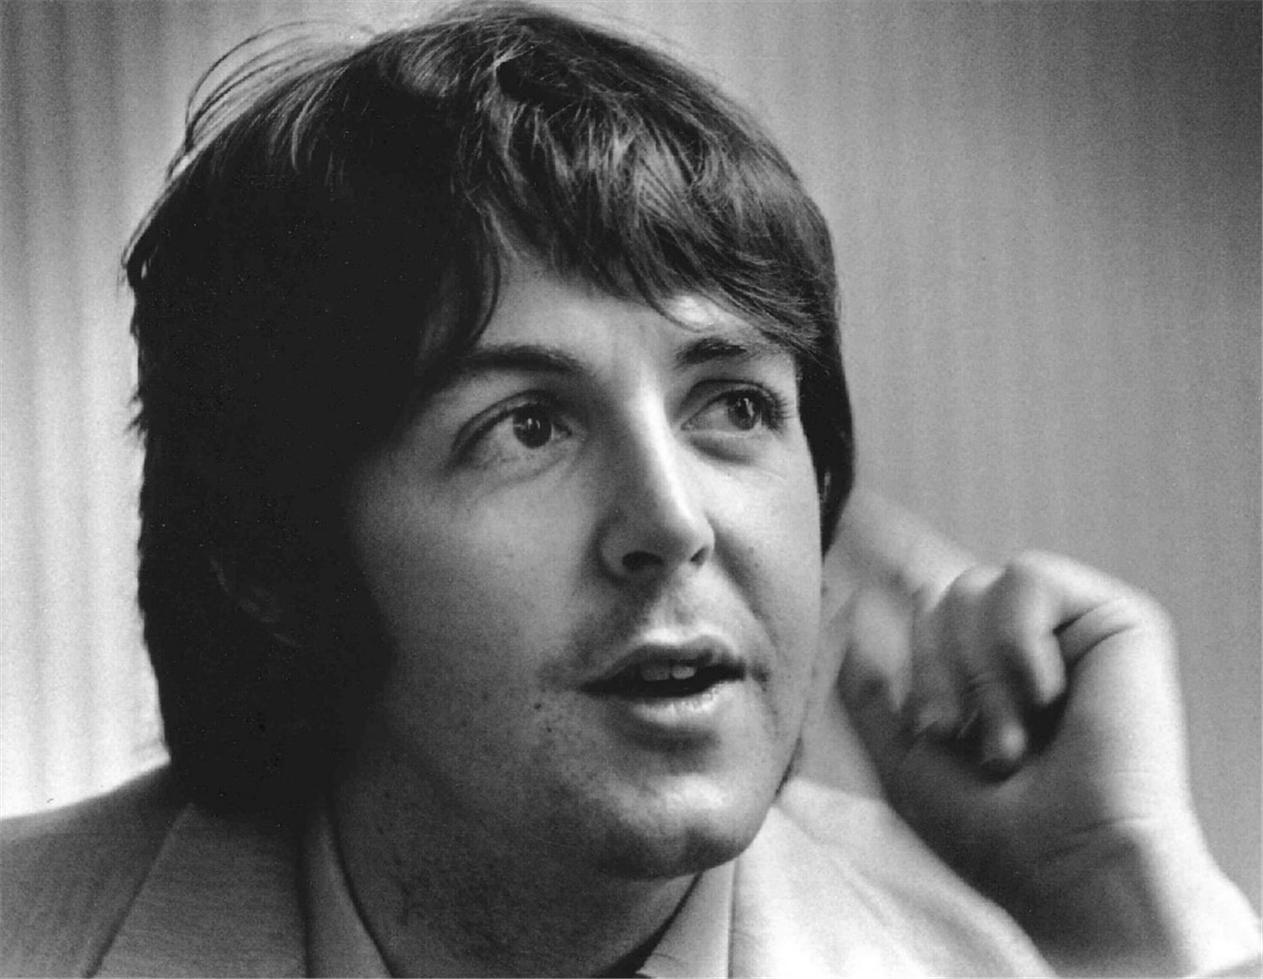 Barrie Wentzell Black and White Photograph - Paul McCartney, London, 1968